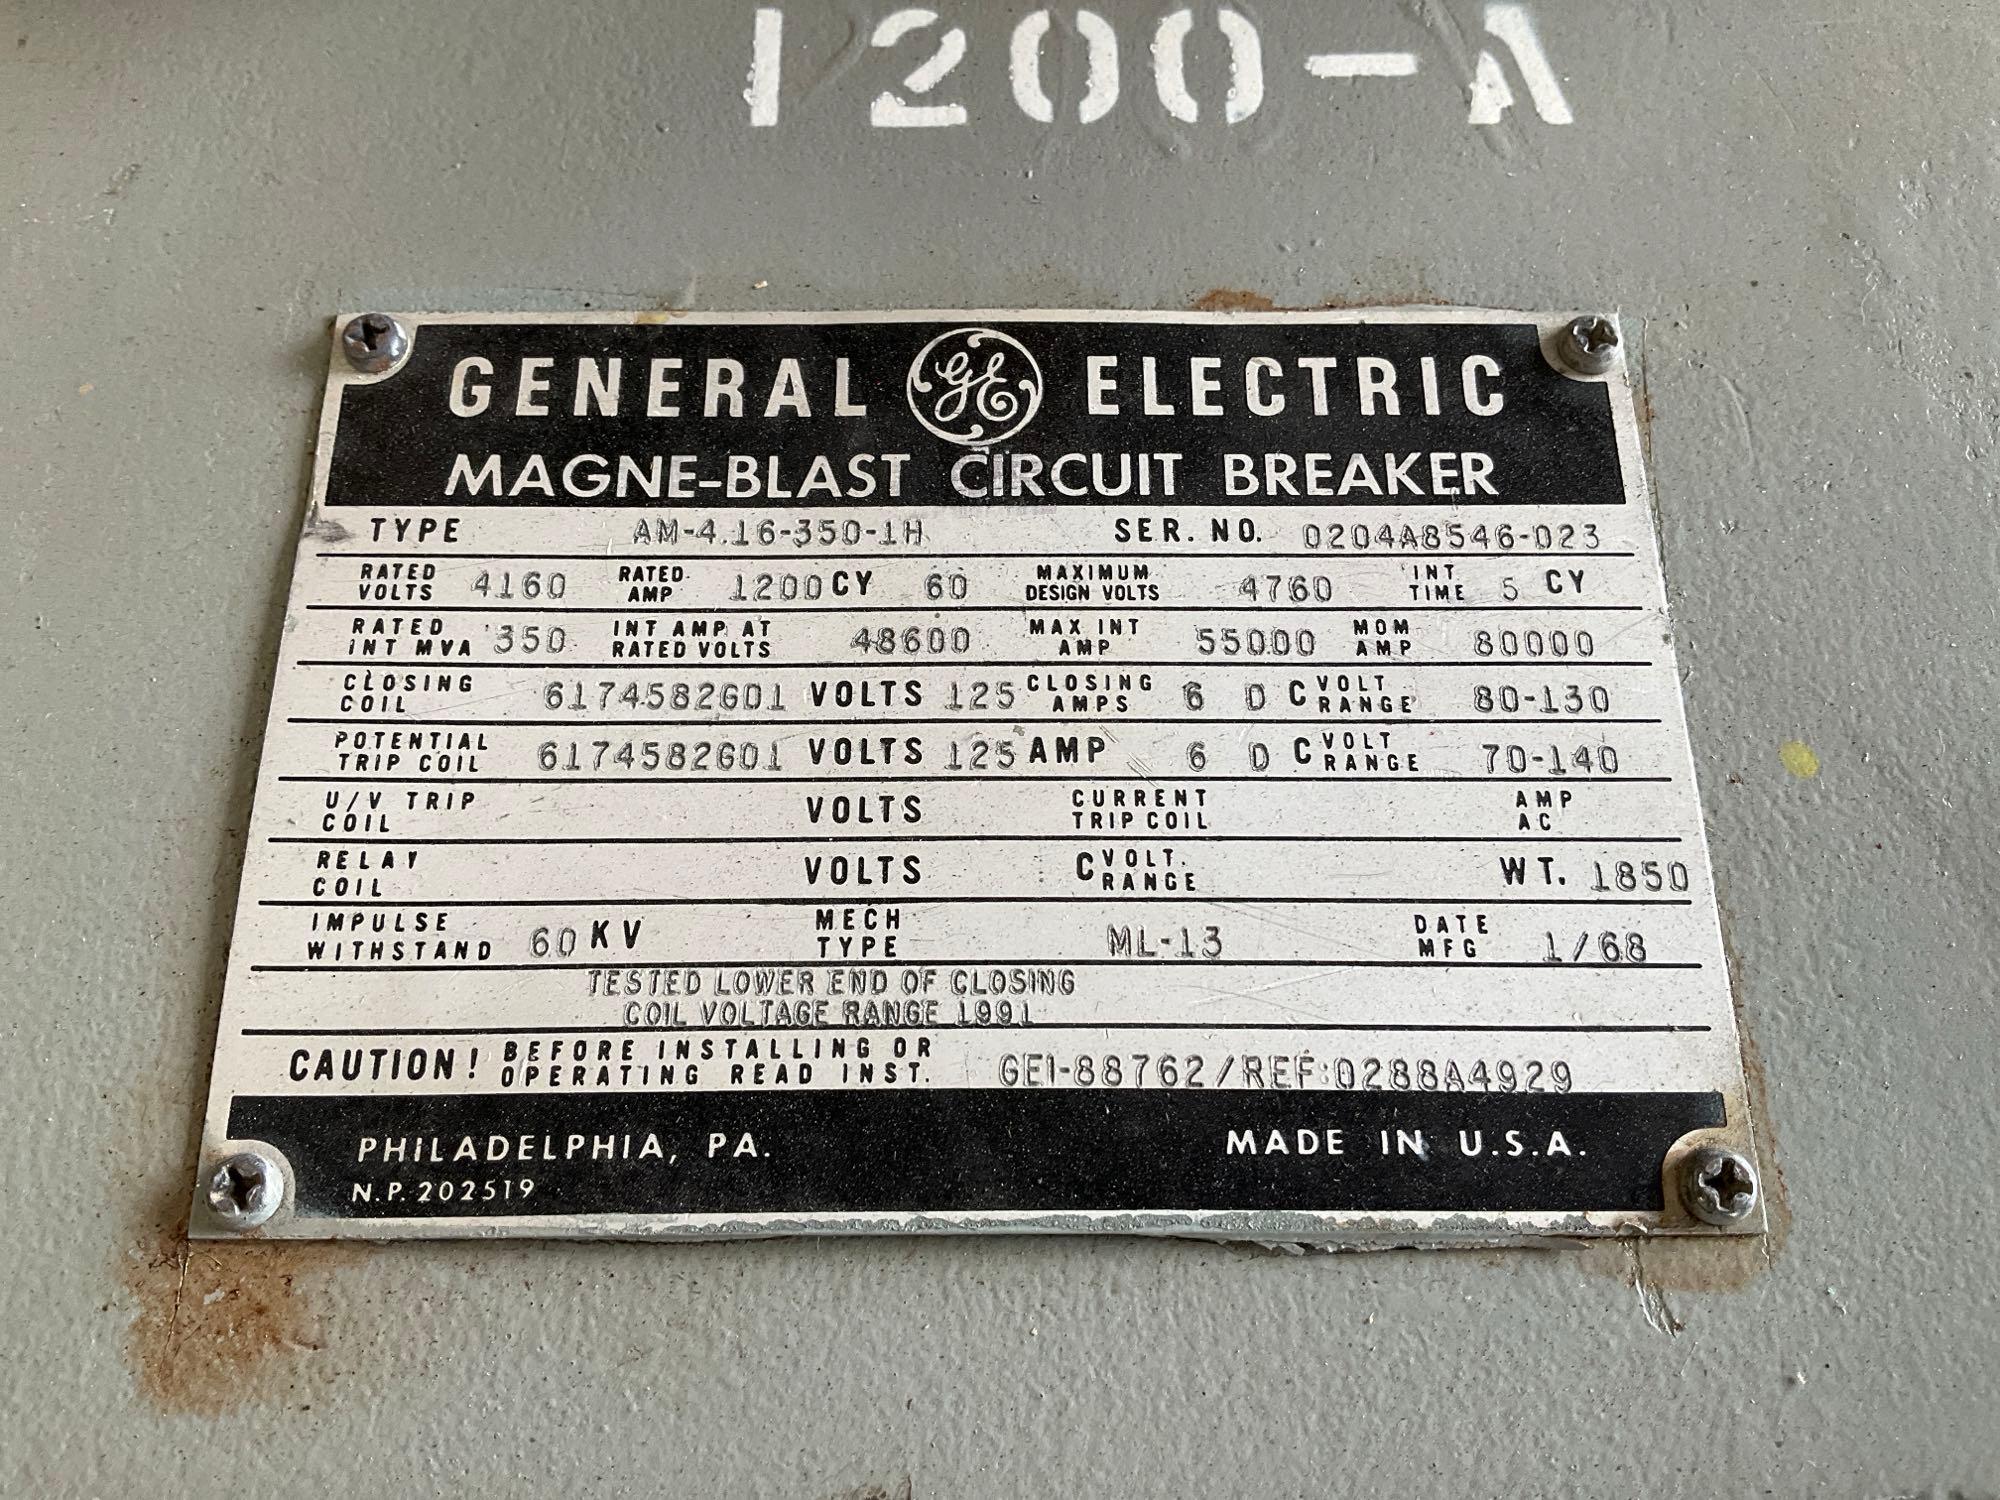 GE - GENERAL ELECTRIC MAGNE-BLAST CIRCUIT BREAKER, TYPE AM-4.16-350-2H, 60HZ, 1200 AMP